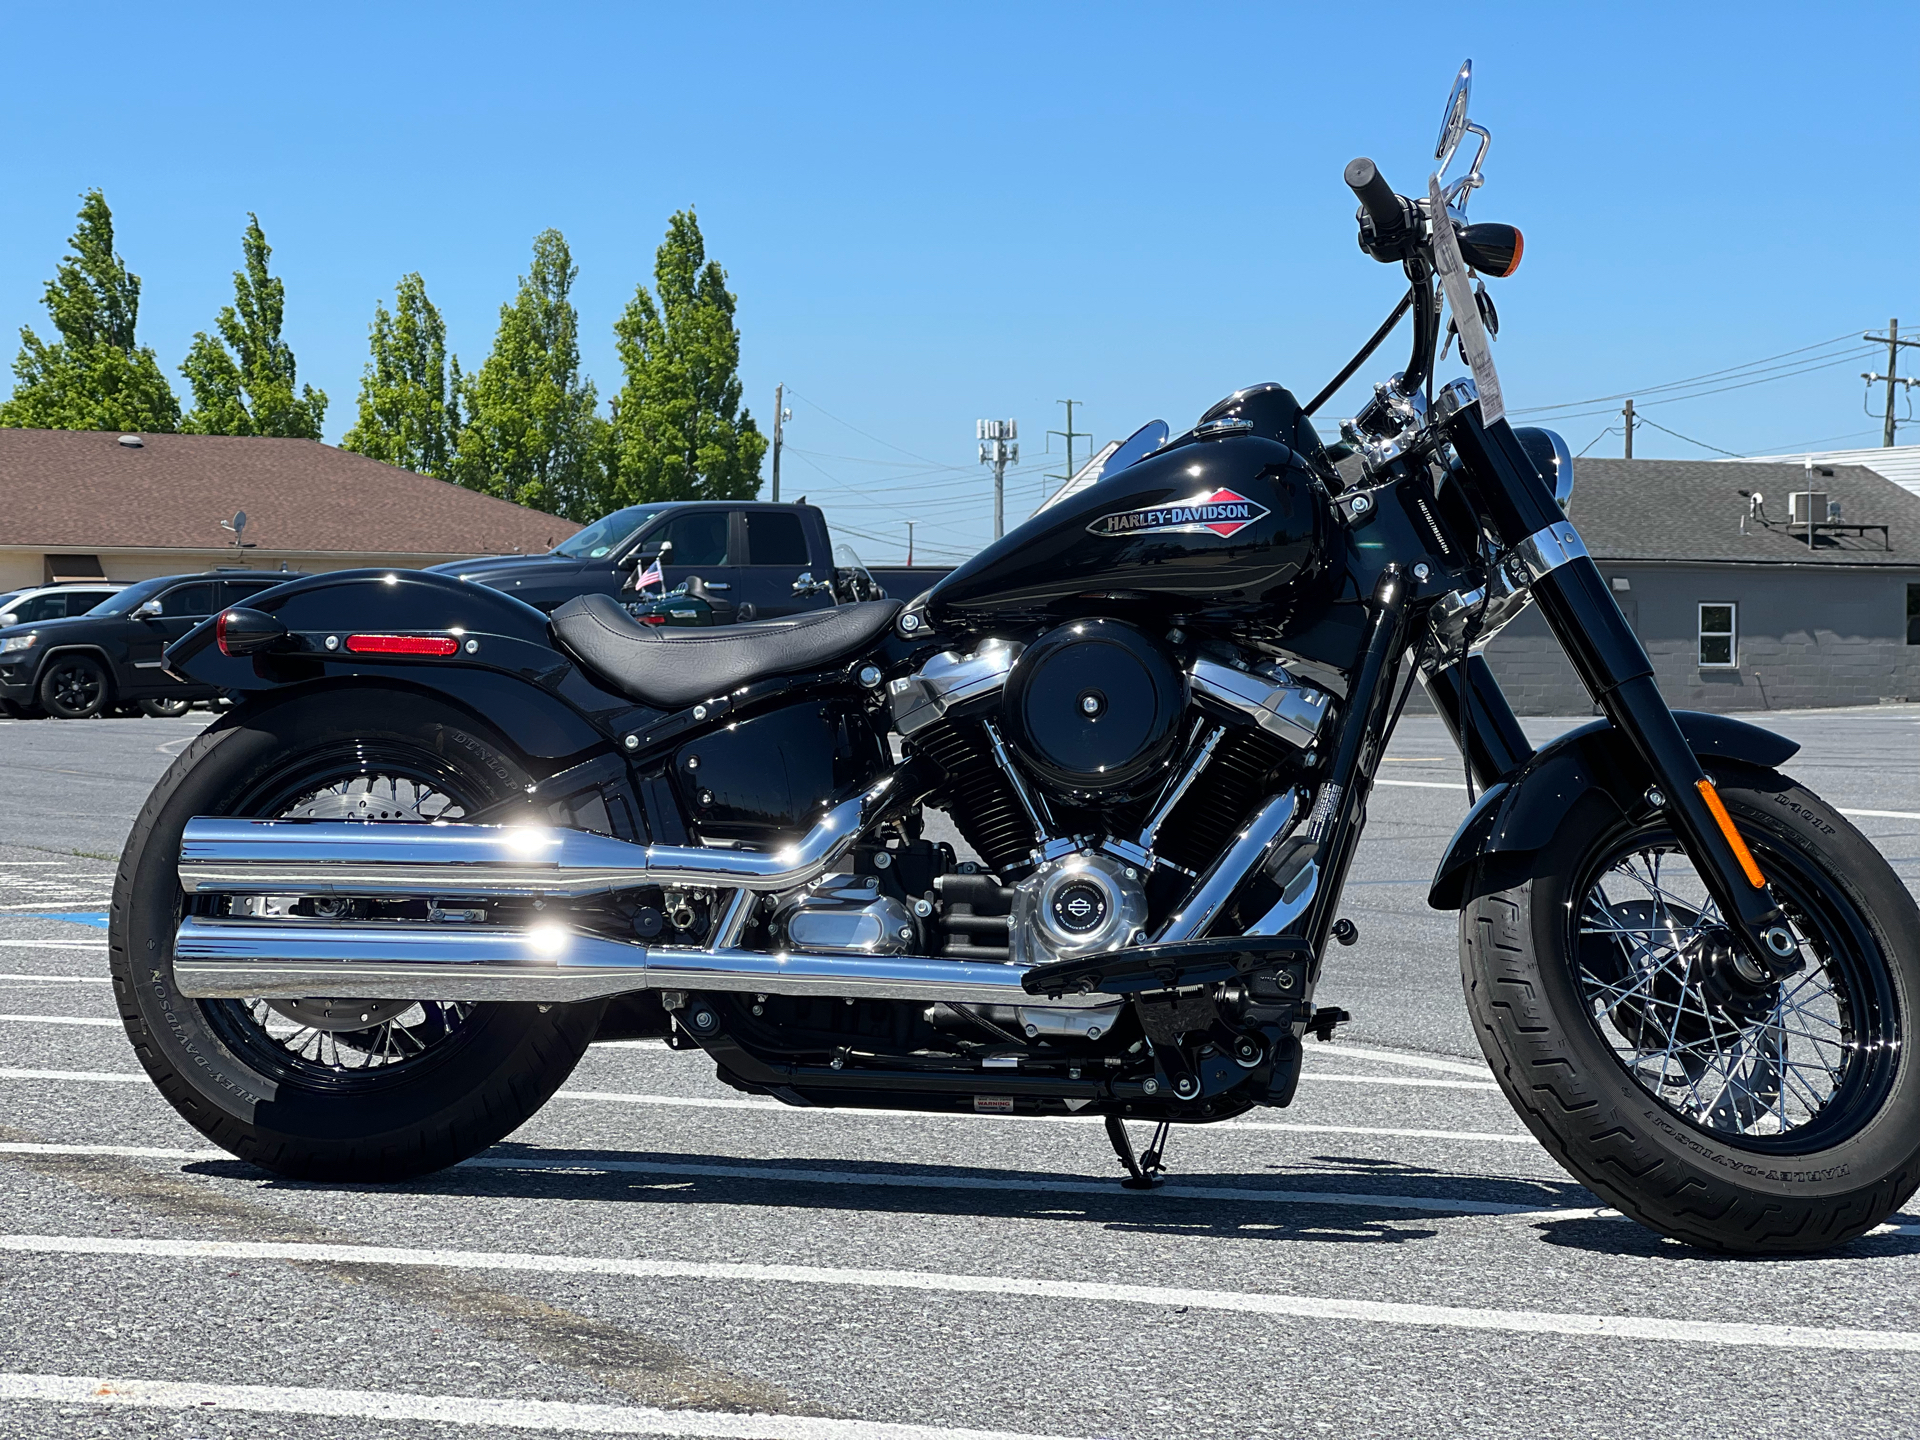 2021 Harley-Davidson Softail Slim® in Frederick, Maryland - Photo 3